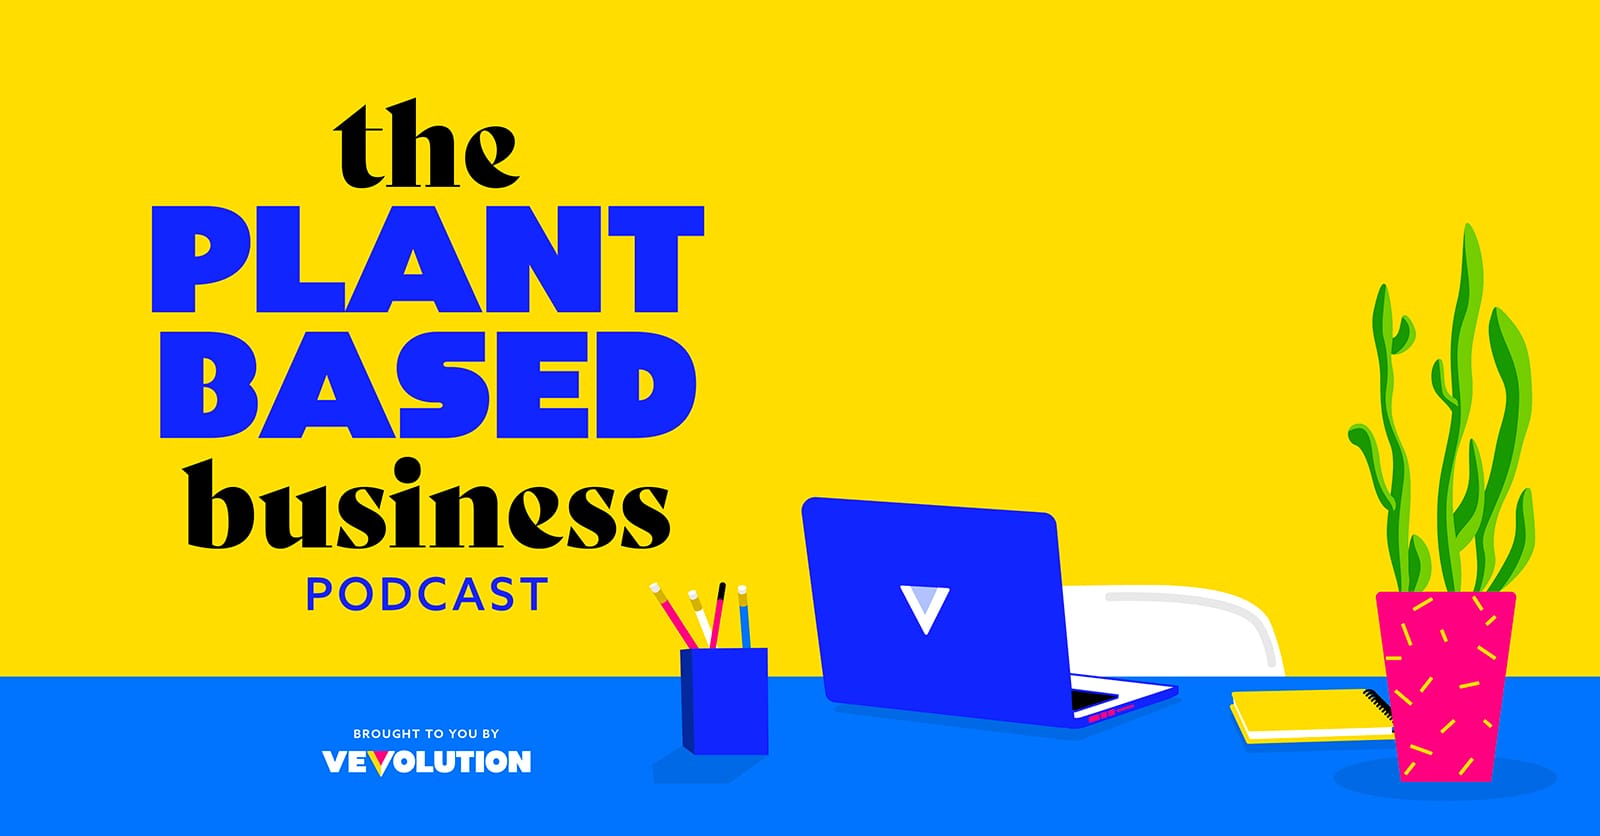 The Plant Based Business Podcast by Vevolution - Vevolution